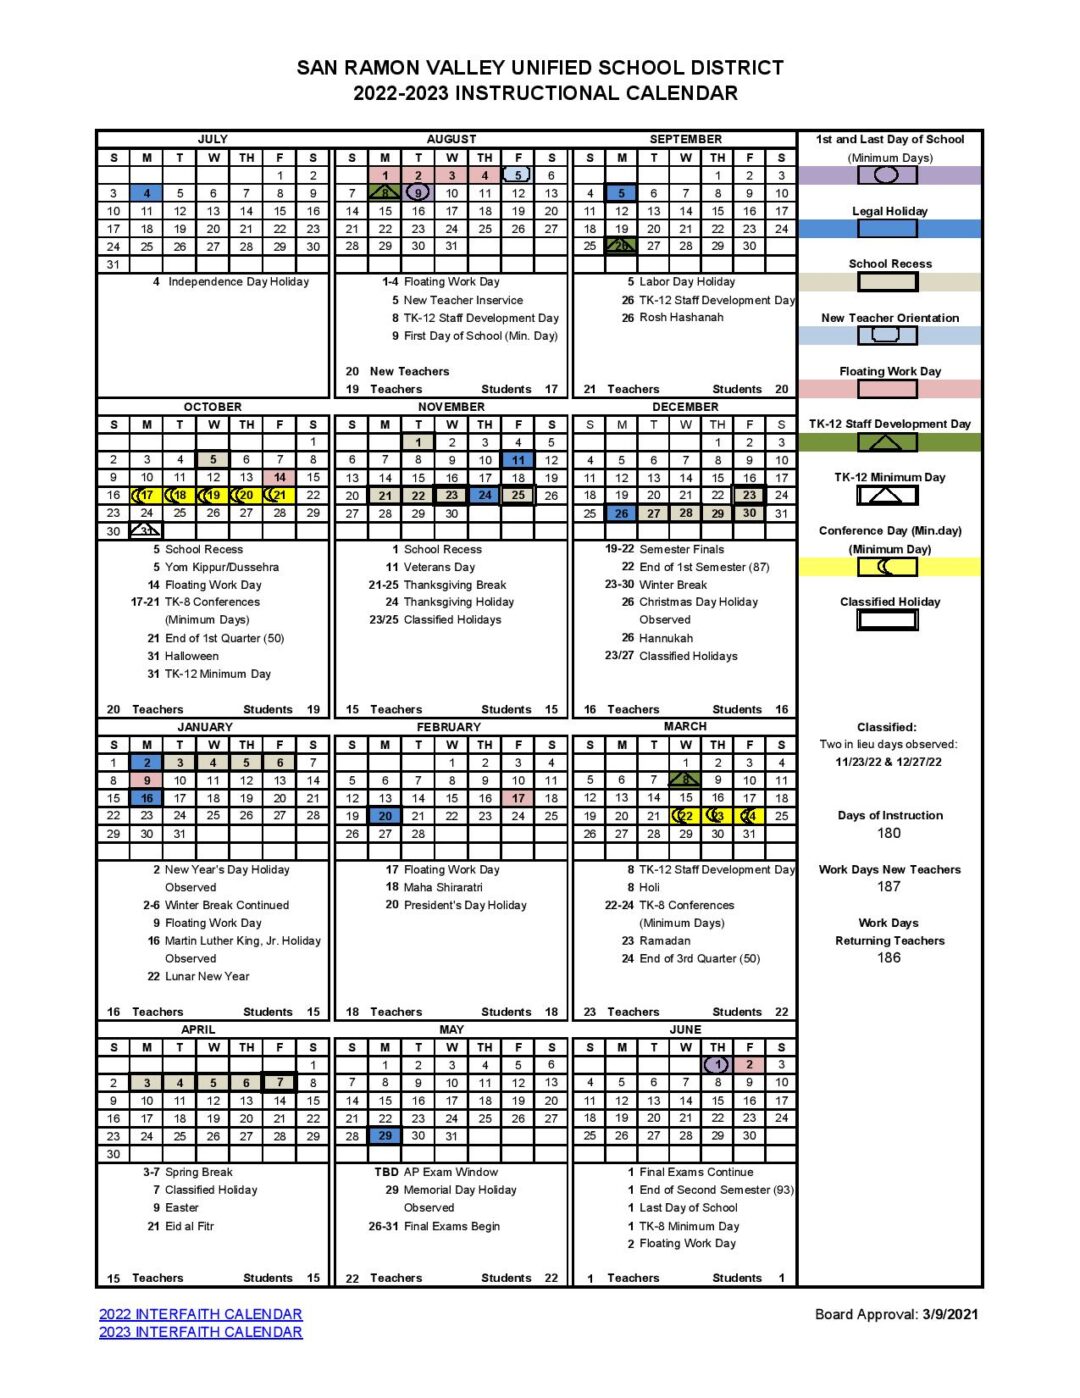 San Ramon Valley Unified School District Calendar 2022-2023